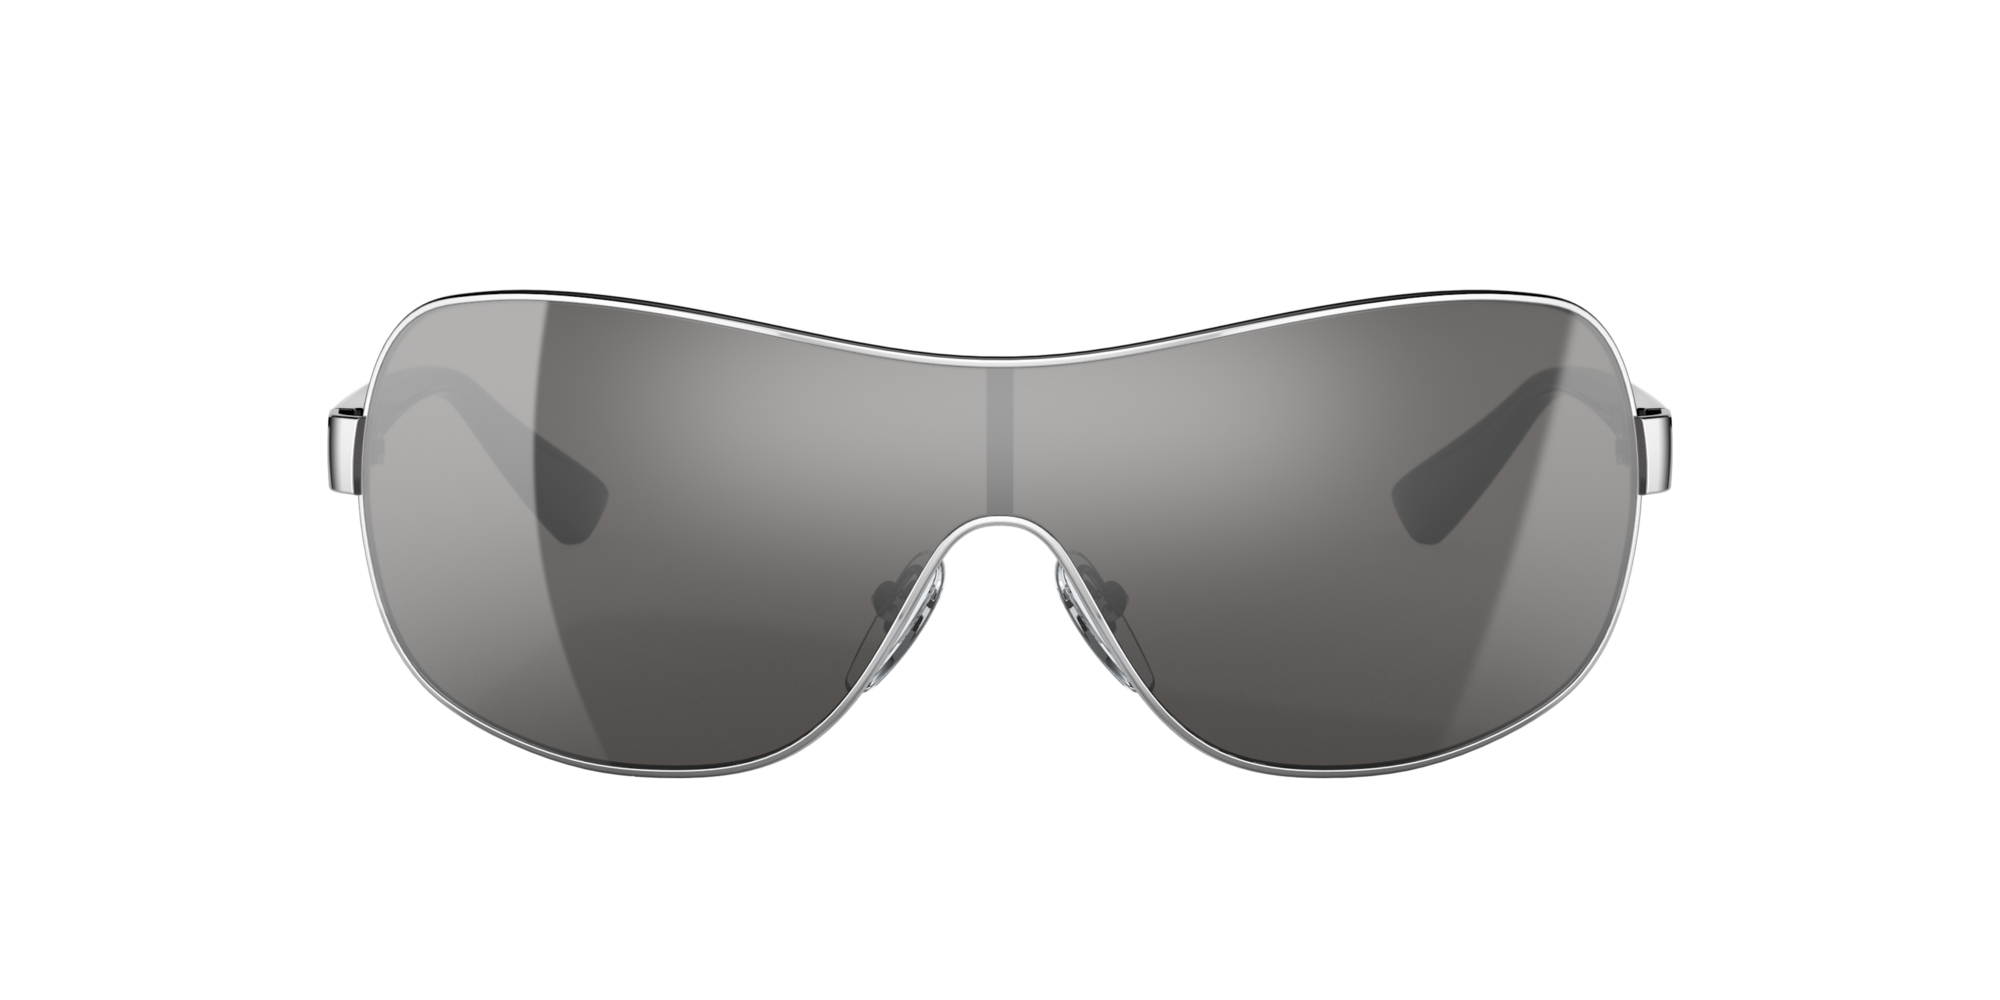 Silver Grey Silver Sunglass Collection Sunglasses Hut | USA Sunglass Mirror 01 HU1008 & Hut